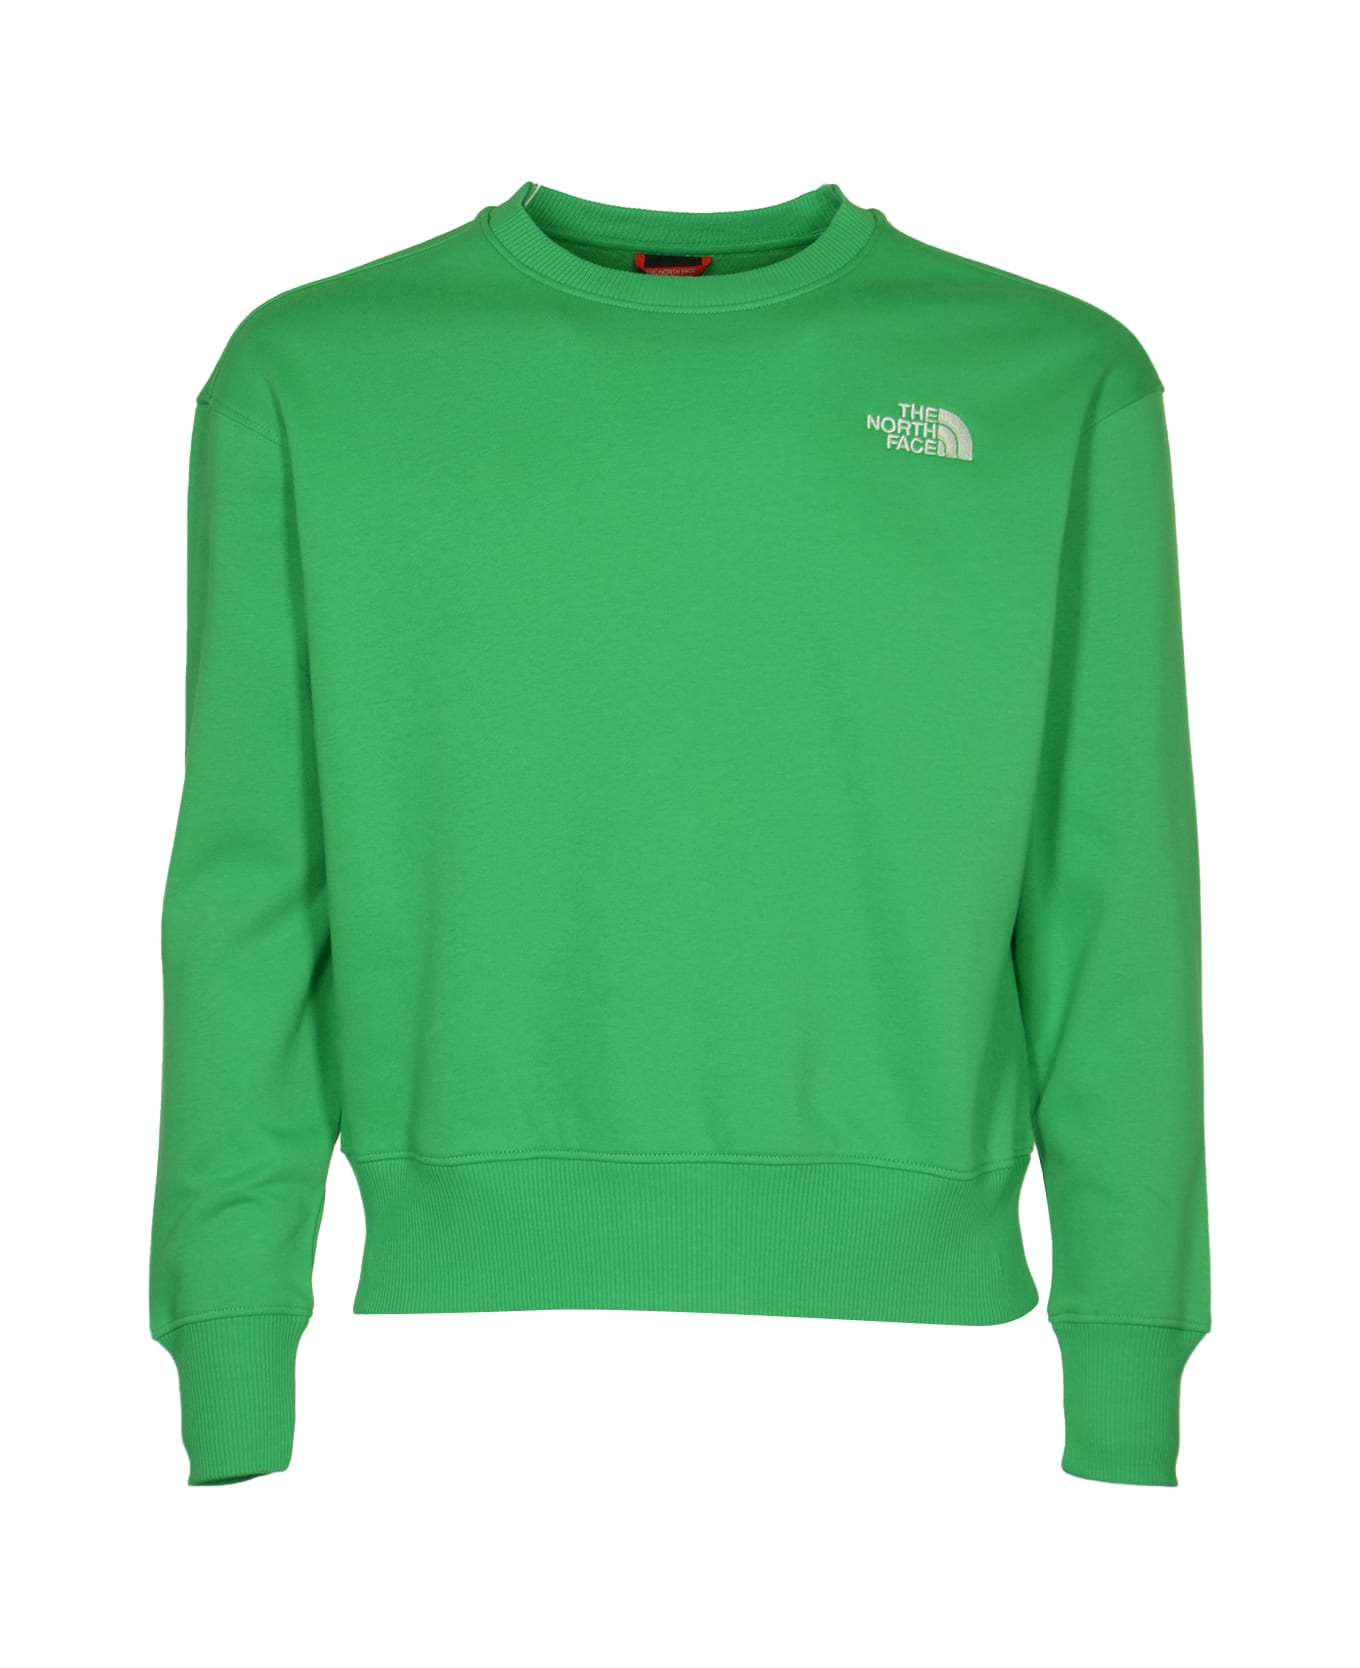 The North Face Essential Crewneck Sweatshirt - Optic Emerald